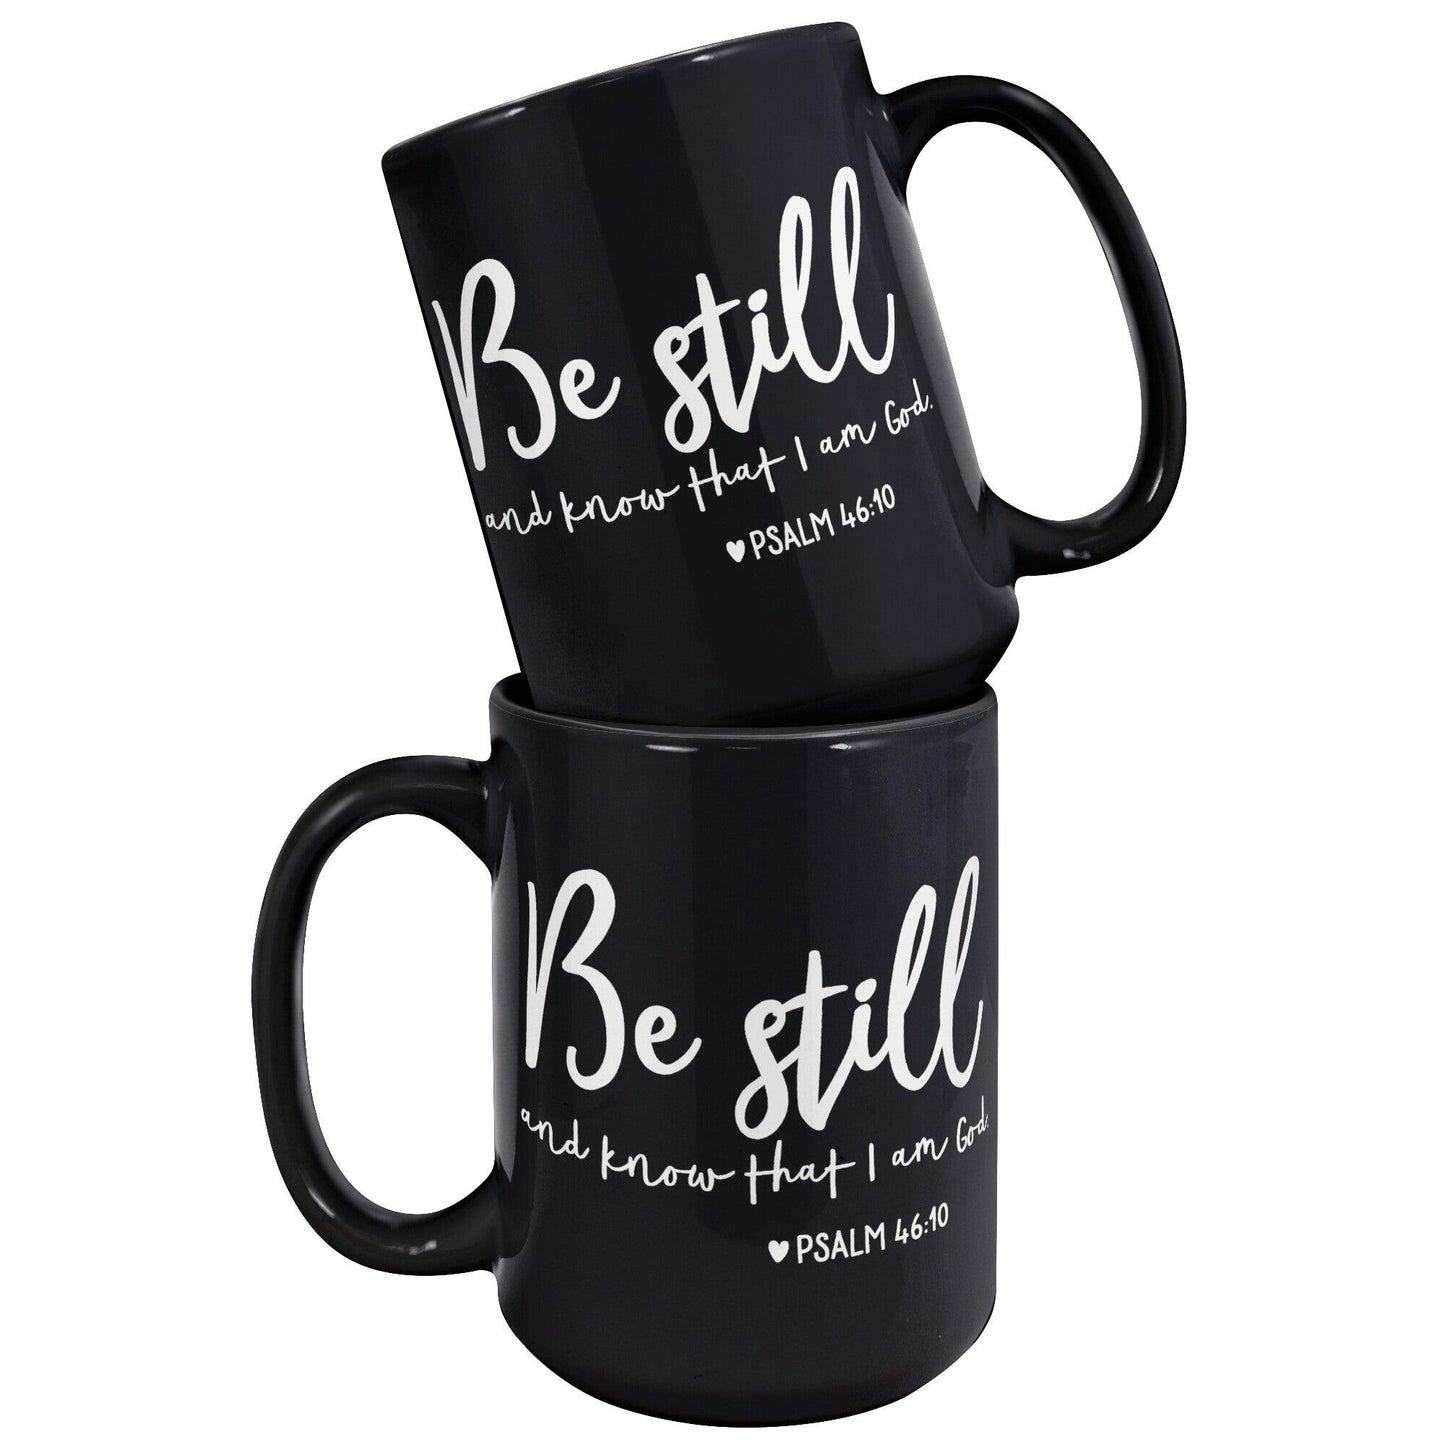 Be still and know that I am God • Psalm 46:10 • Coffee Mug Gift • Black Mug - TheGivenGet